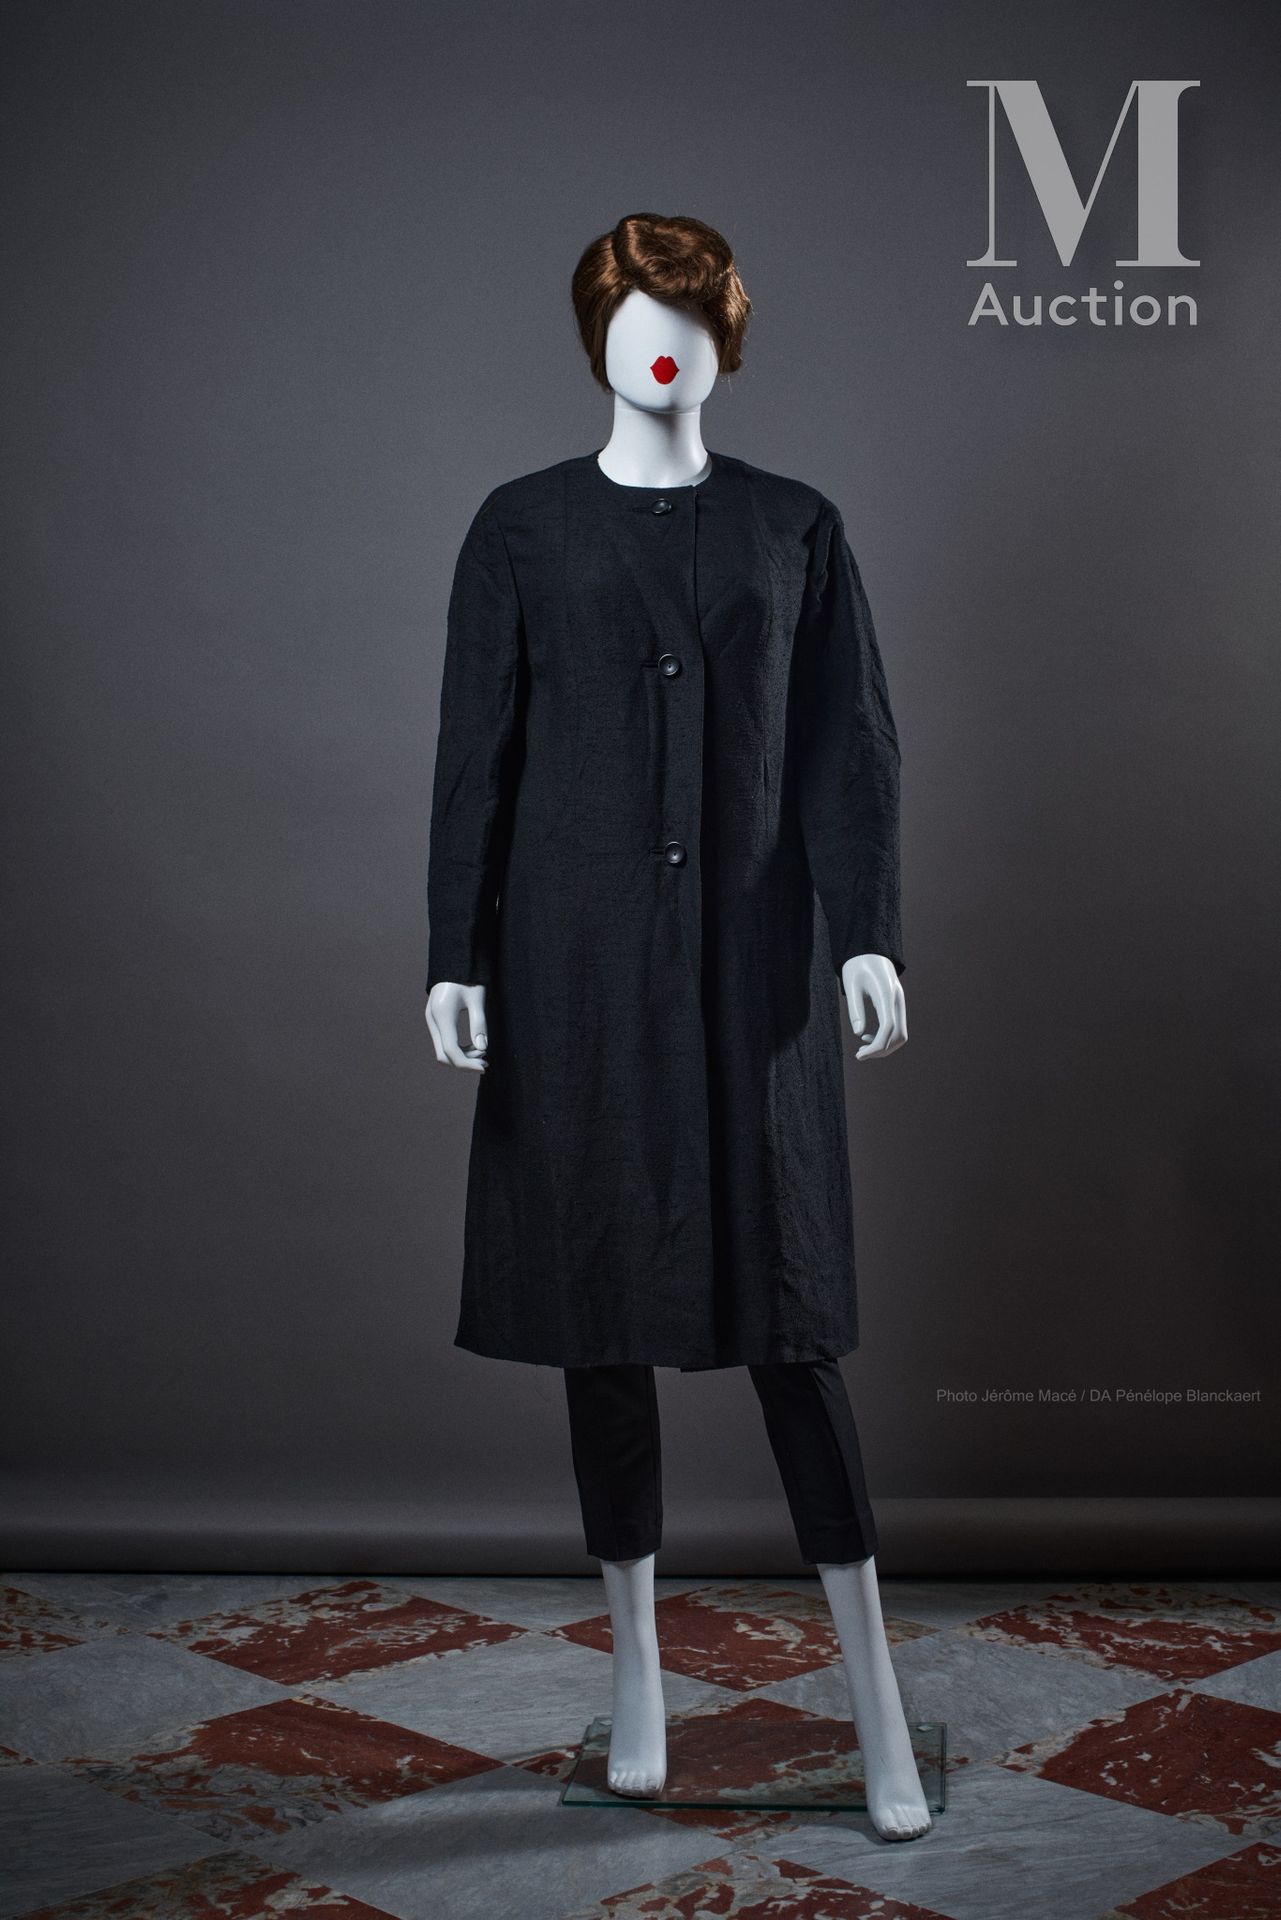 PIERRE BALMAIN (HAUTE COUTURE N°99208) - 1950/60'S 衣服

穿着黑色羊毛混纺绉绸布衫

黑色标签，白色图案

&hellip;